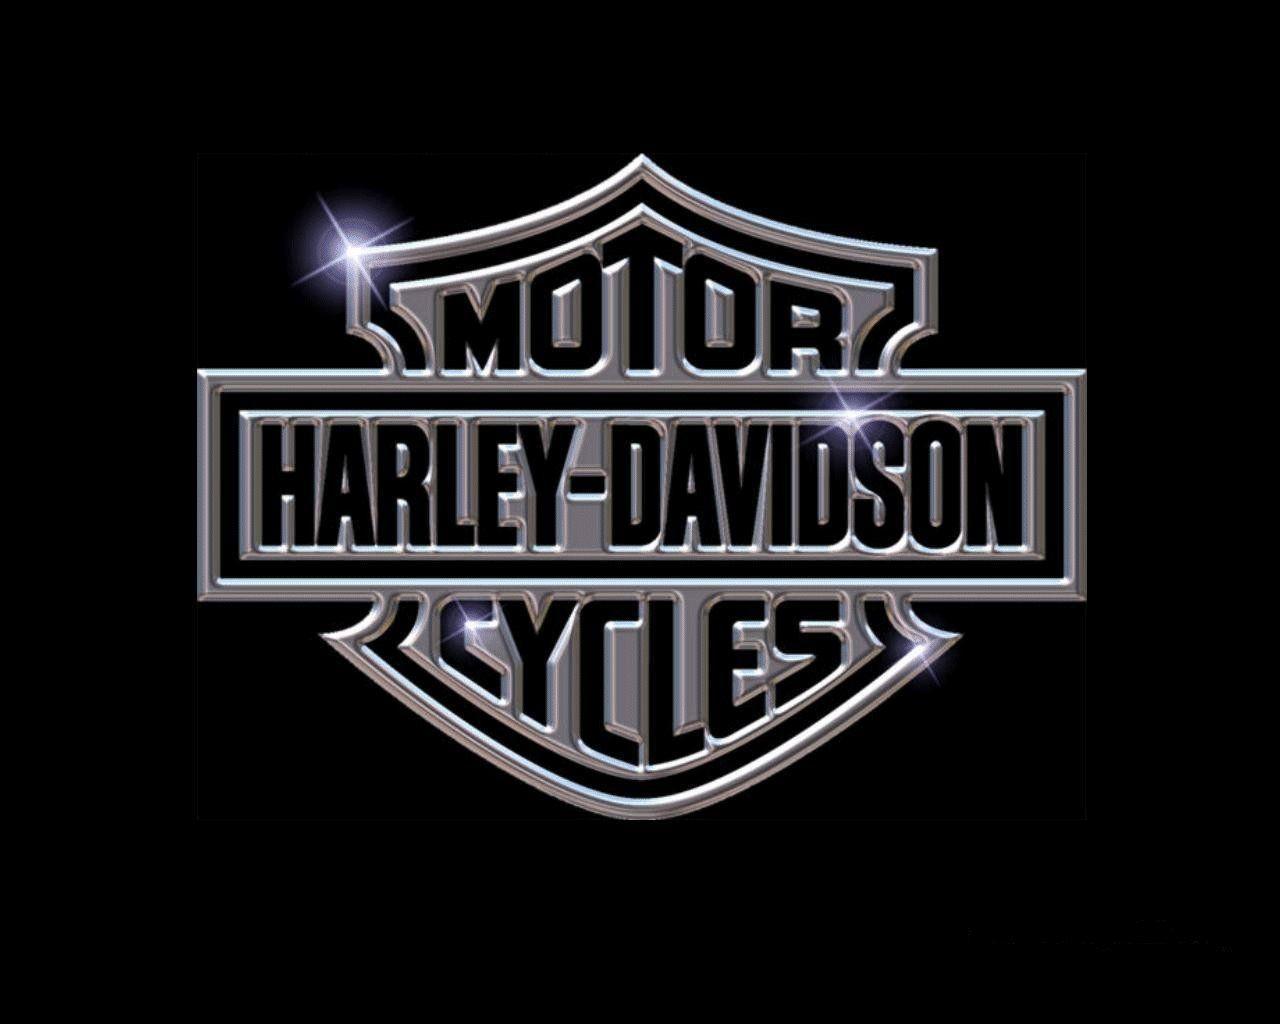 daily mobile 4 all: harley davidson logo wallpaper